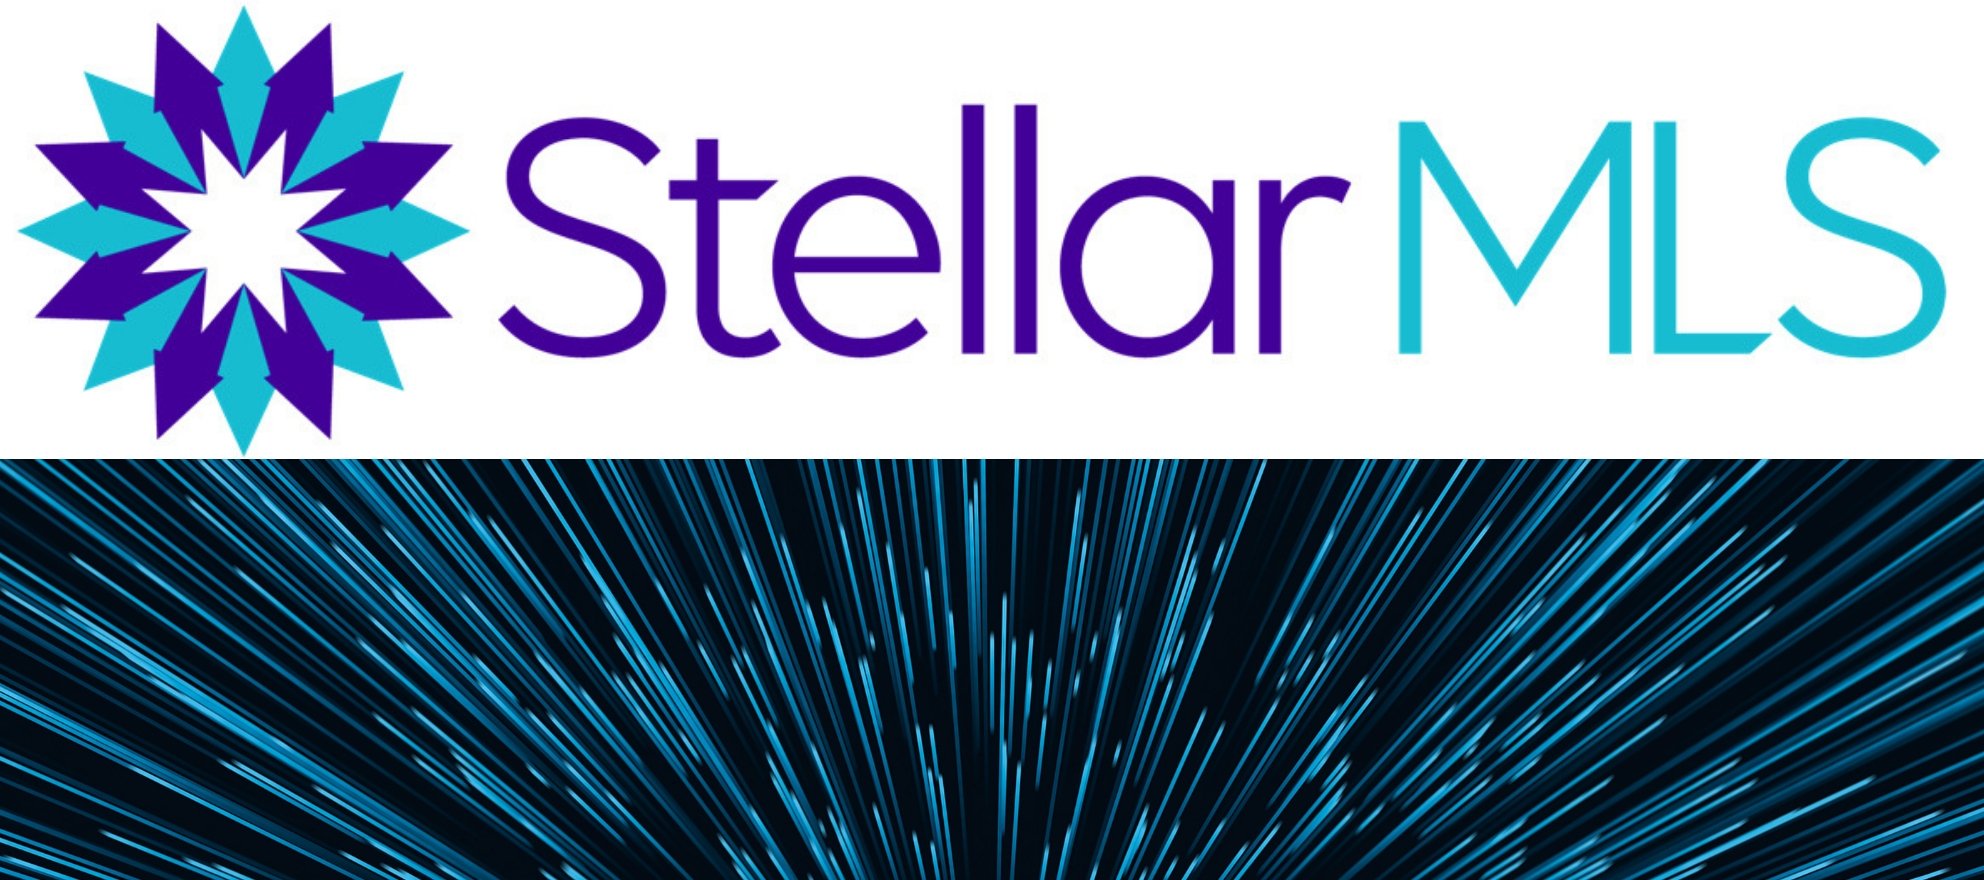 Stellar MLS Account Login Security Updates in Aug2020 - Stellar MLS